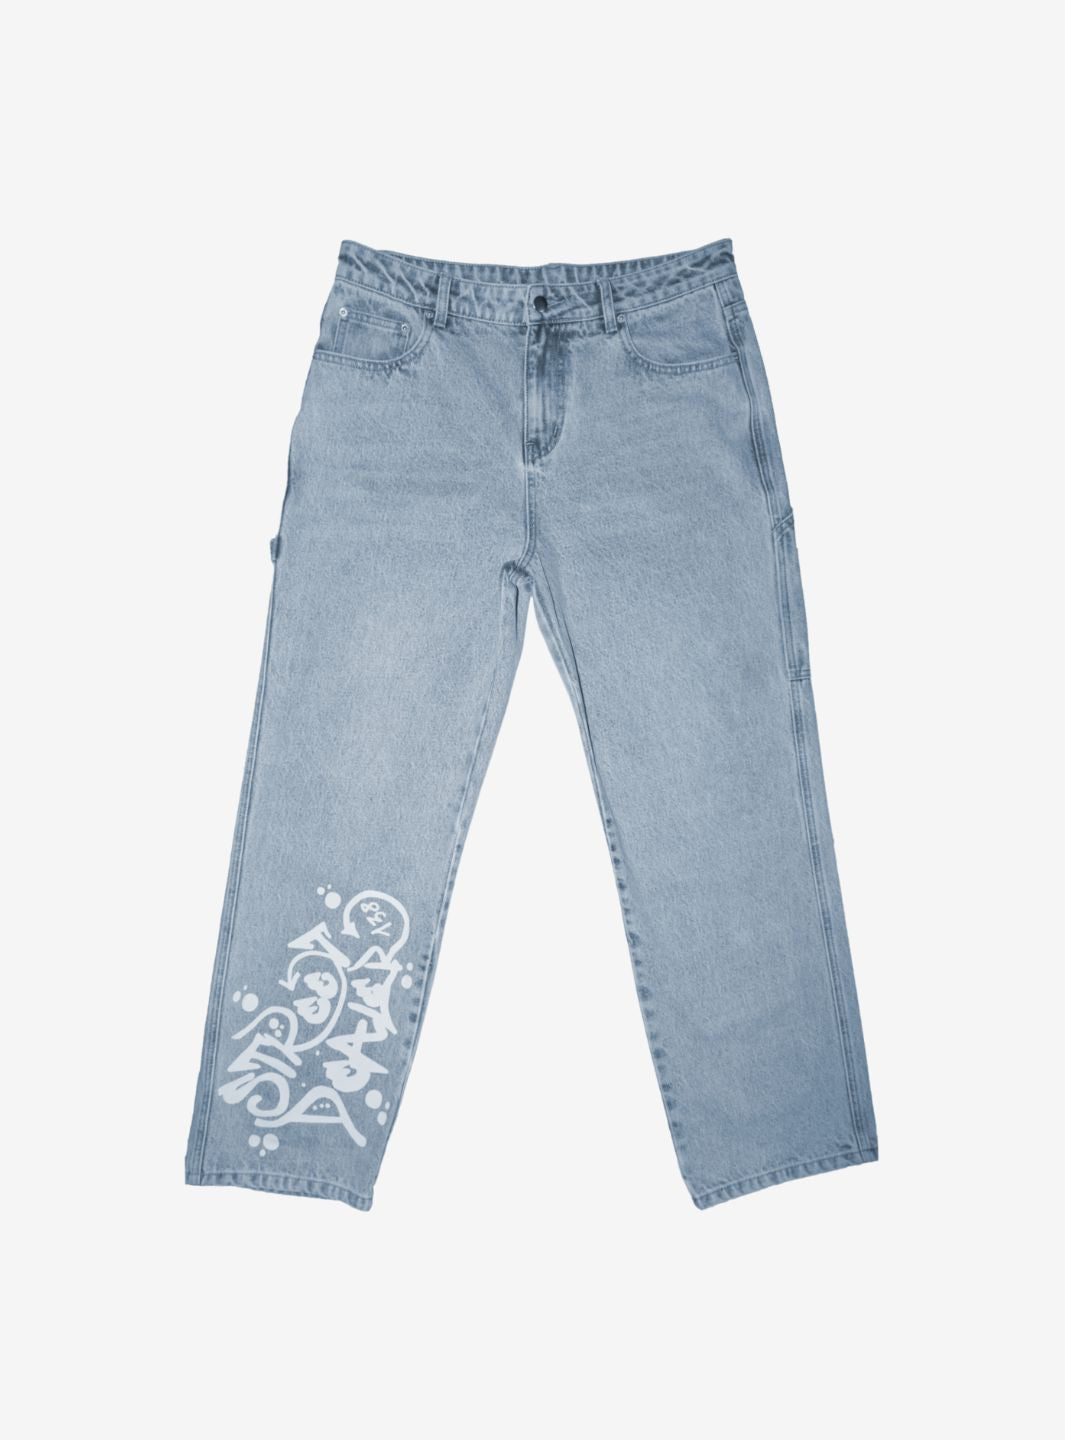 Street Dealer Carpenter Jeans